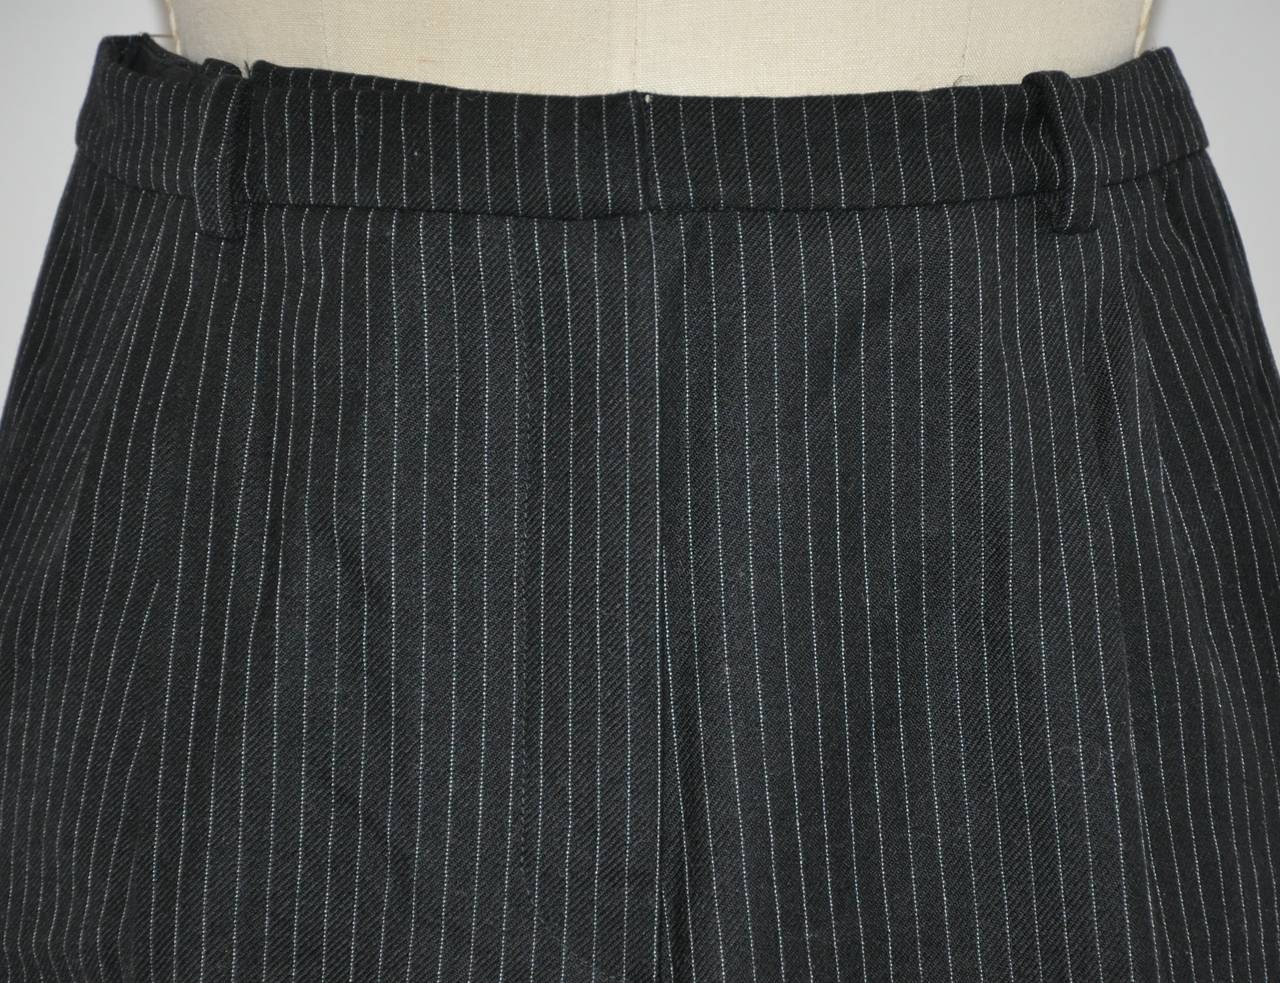 Balenciaga black wool pinstripe trousers measures 31